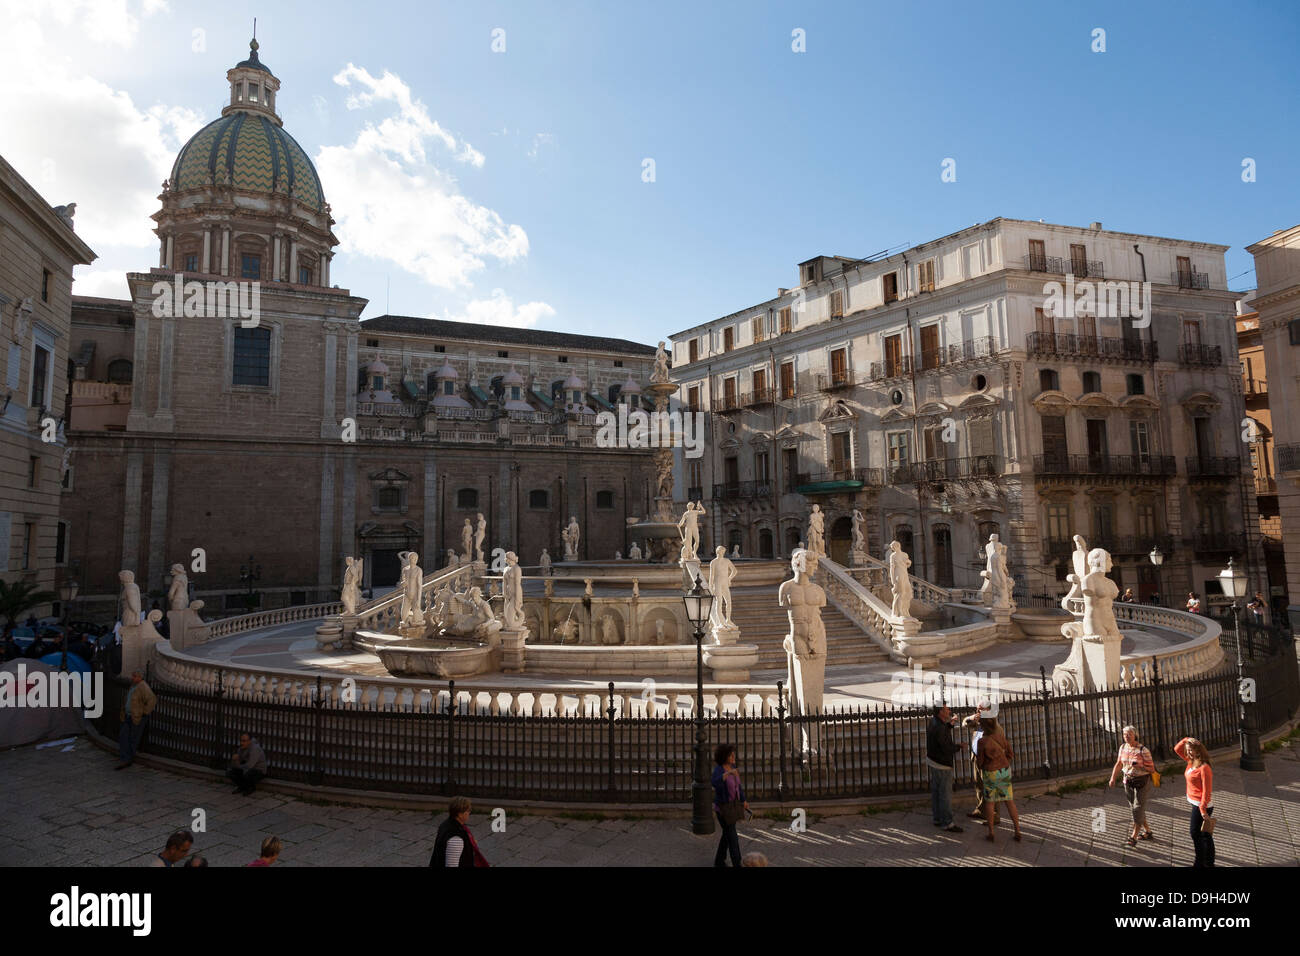 Piazza Pretoria, Pretoria Brunnen Fontana della Vergogna, der Brunnen der Scham, Palermo, Sizilien, Italien Stockfoto